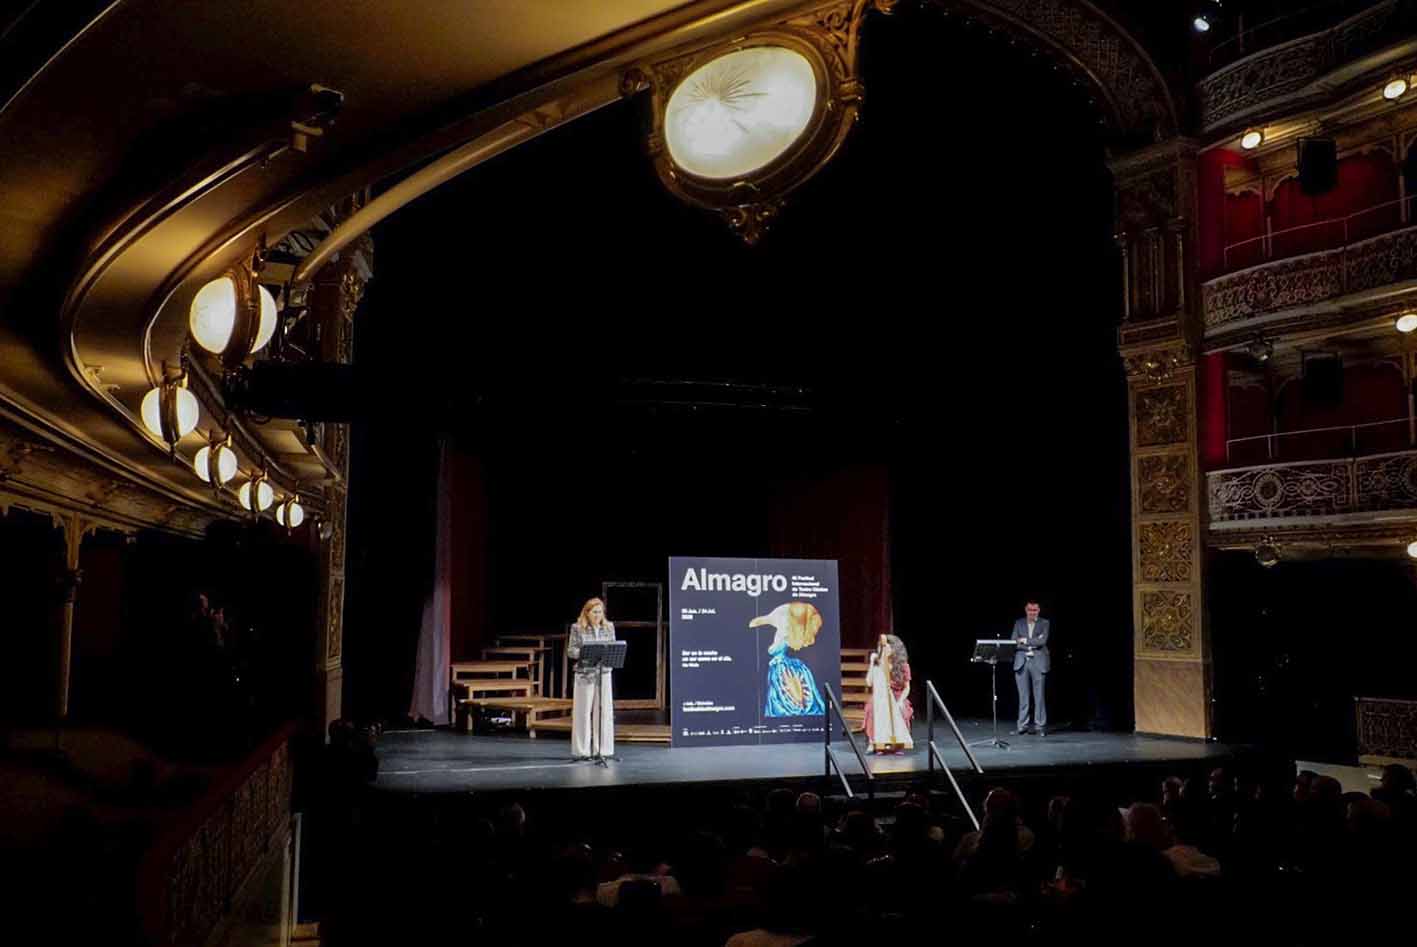 La consejera Rosana Ana Rodríguez presentó el Festival de Almagro en el Teatro de la Comedia de Madrid.